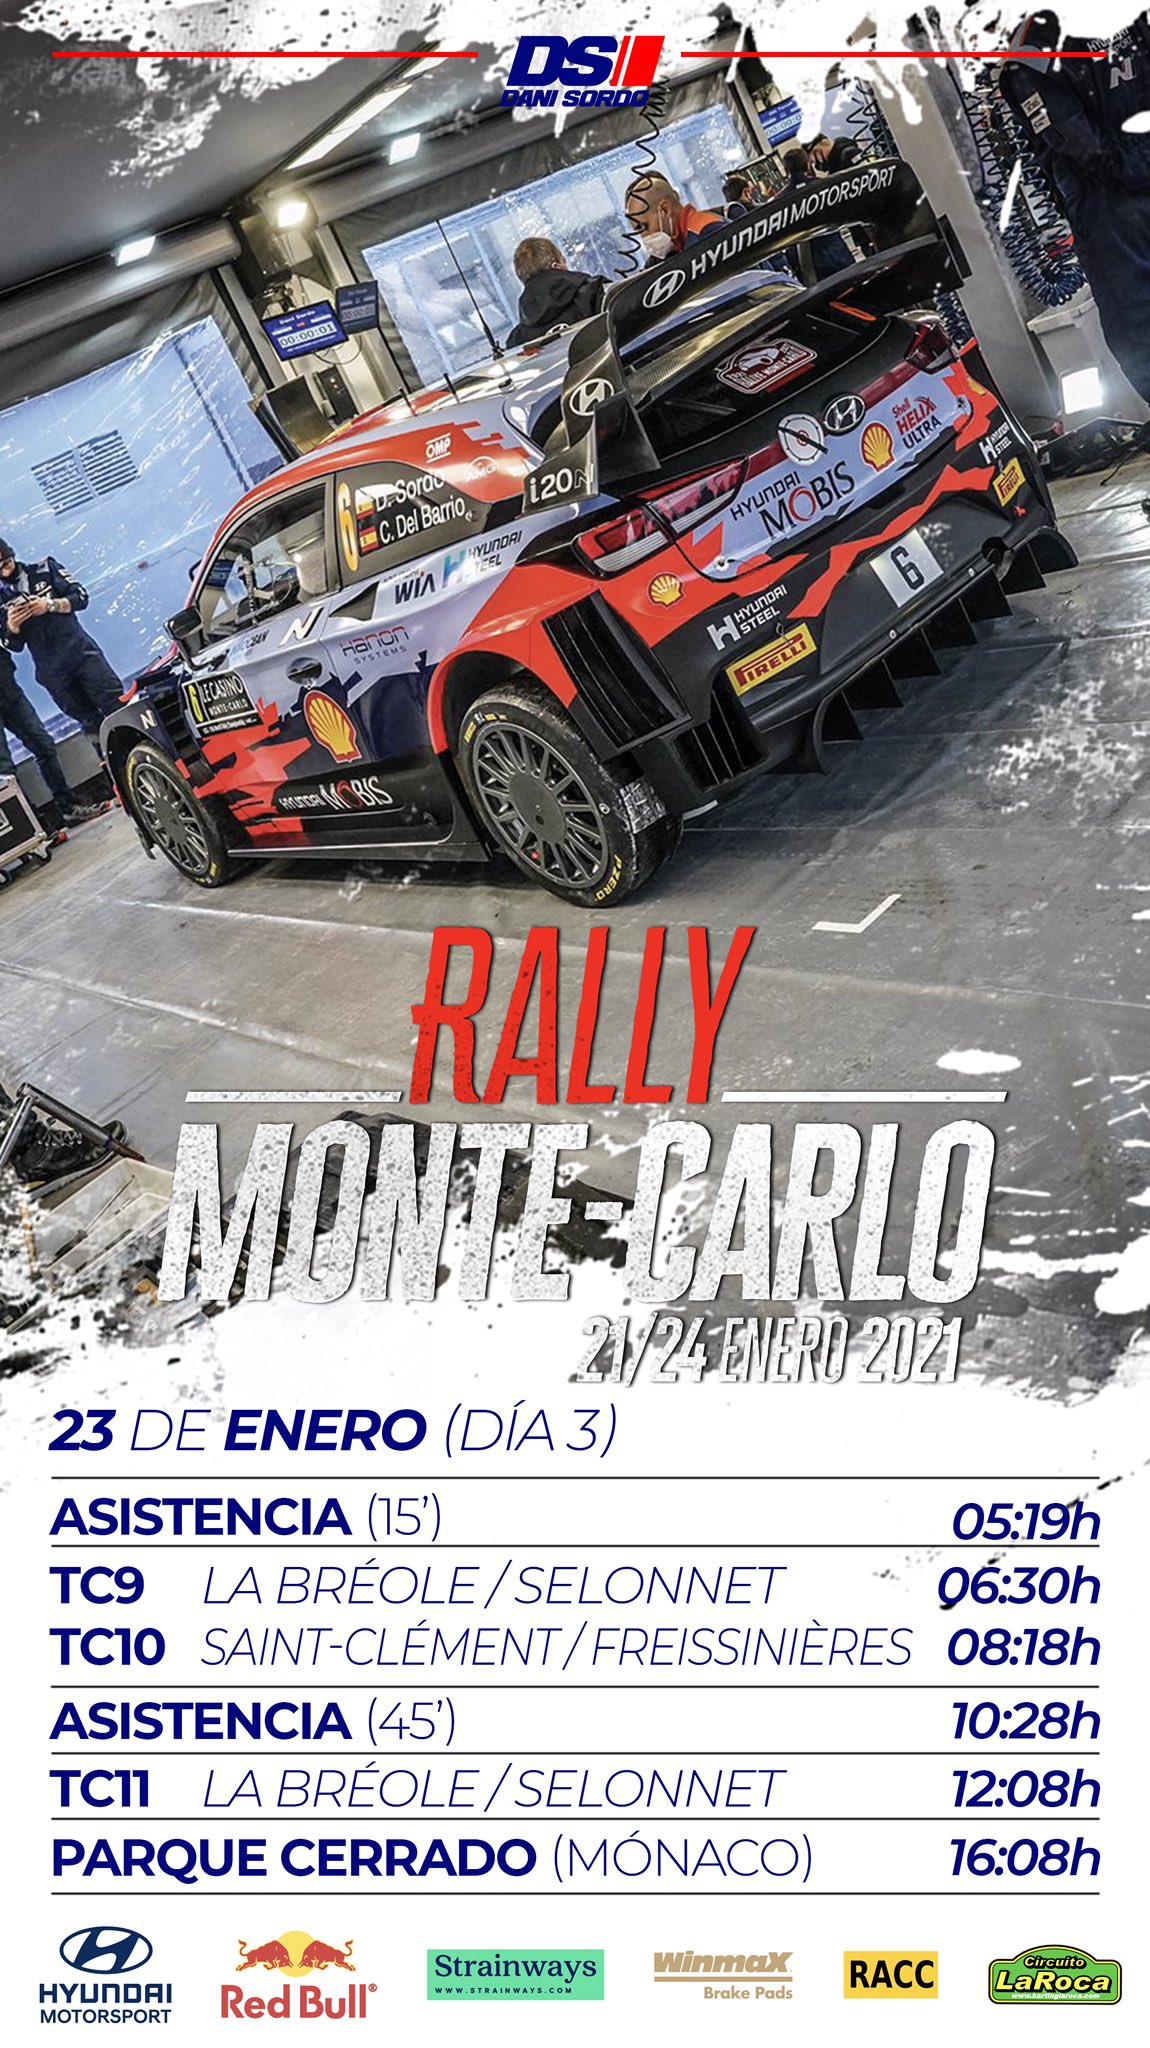 36 - WRC: 89º Rallye Automobile de Monte-Carlo [18-24 Enero] - Página 9 EsY-9MMXMAYHysf?format=jpg&name=large